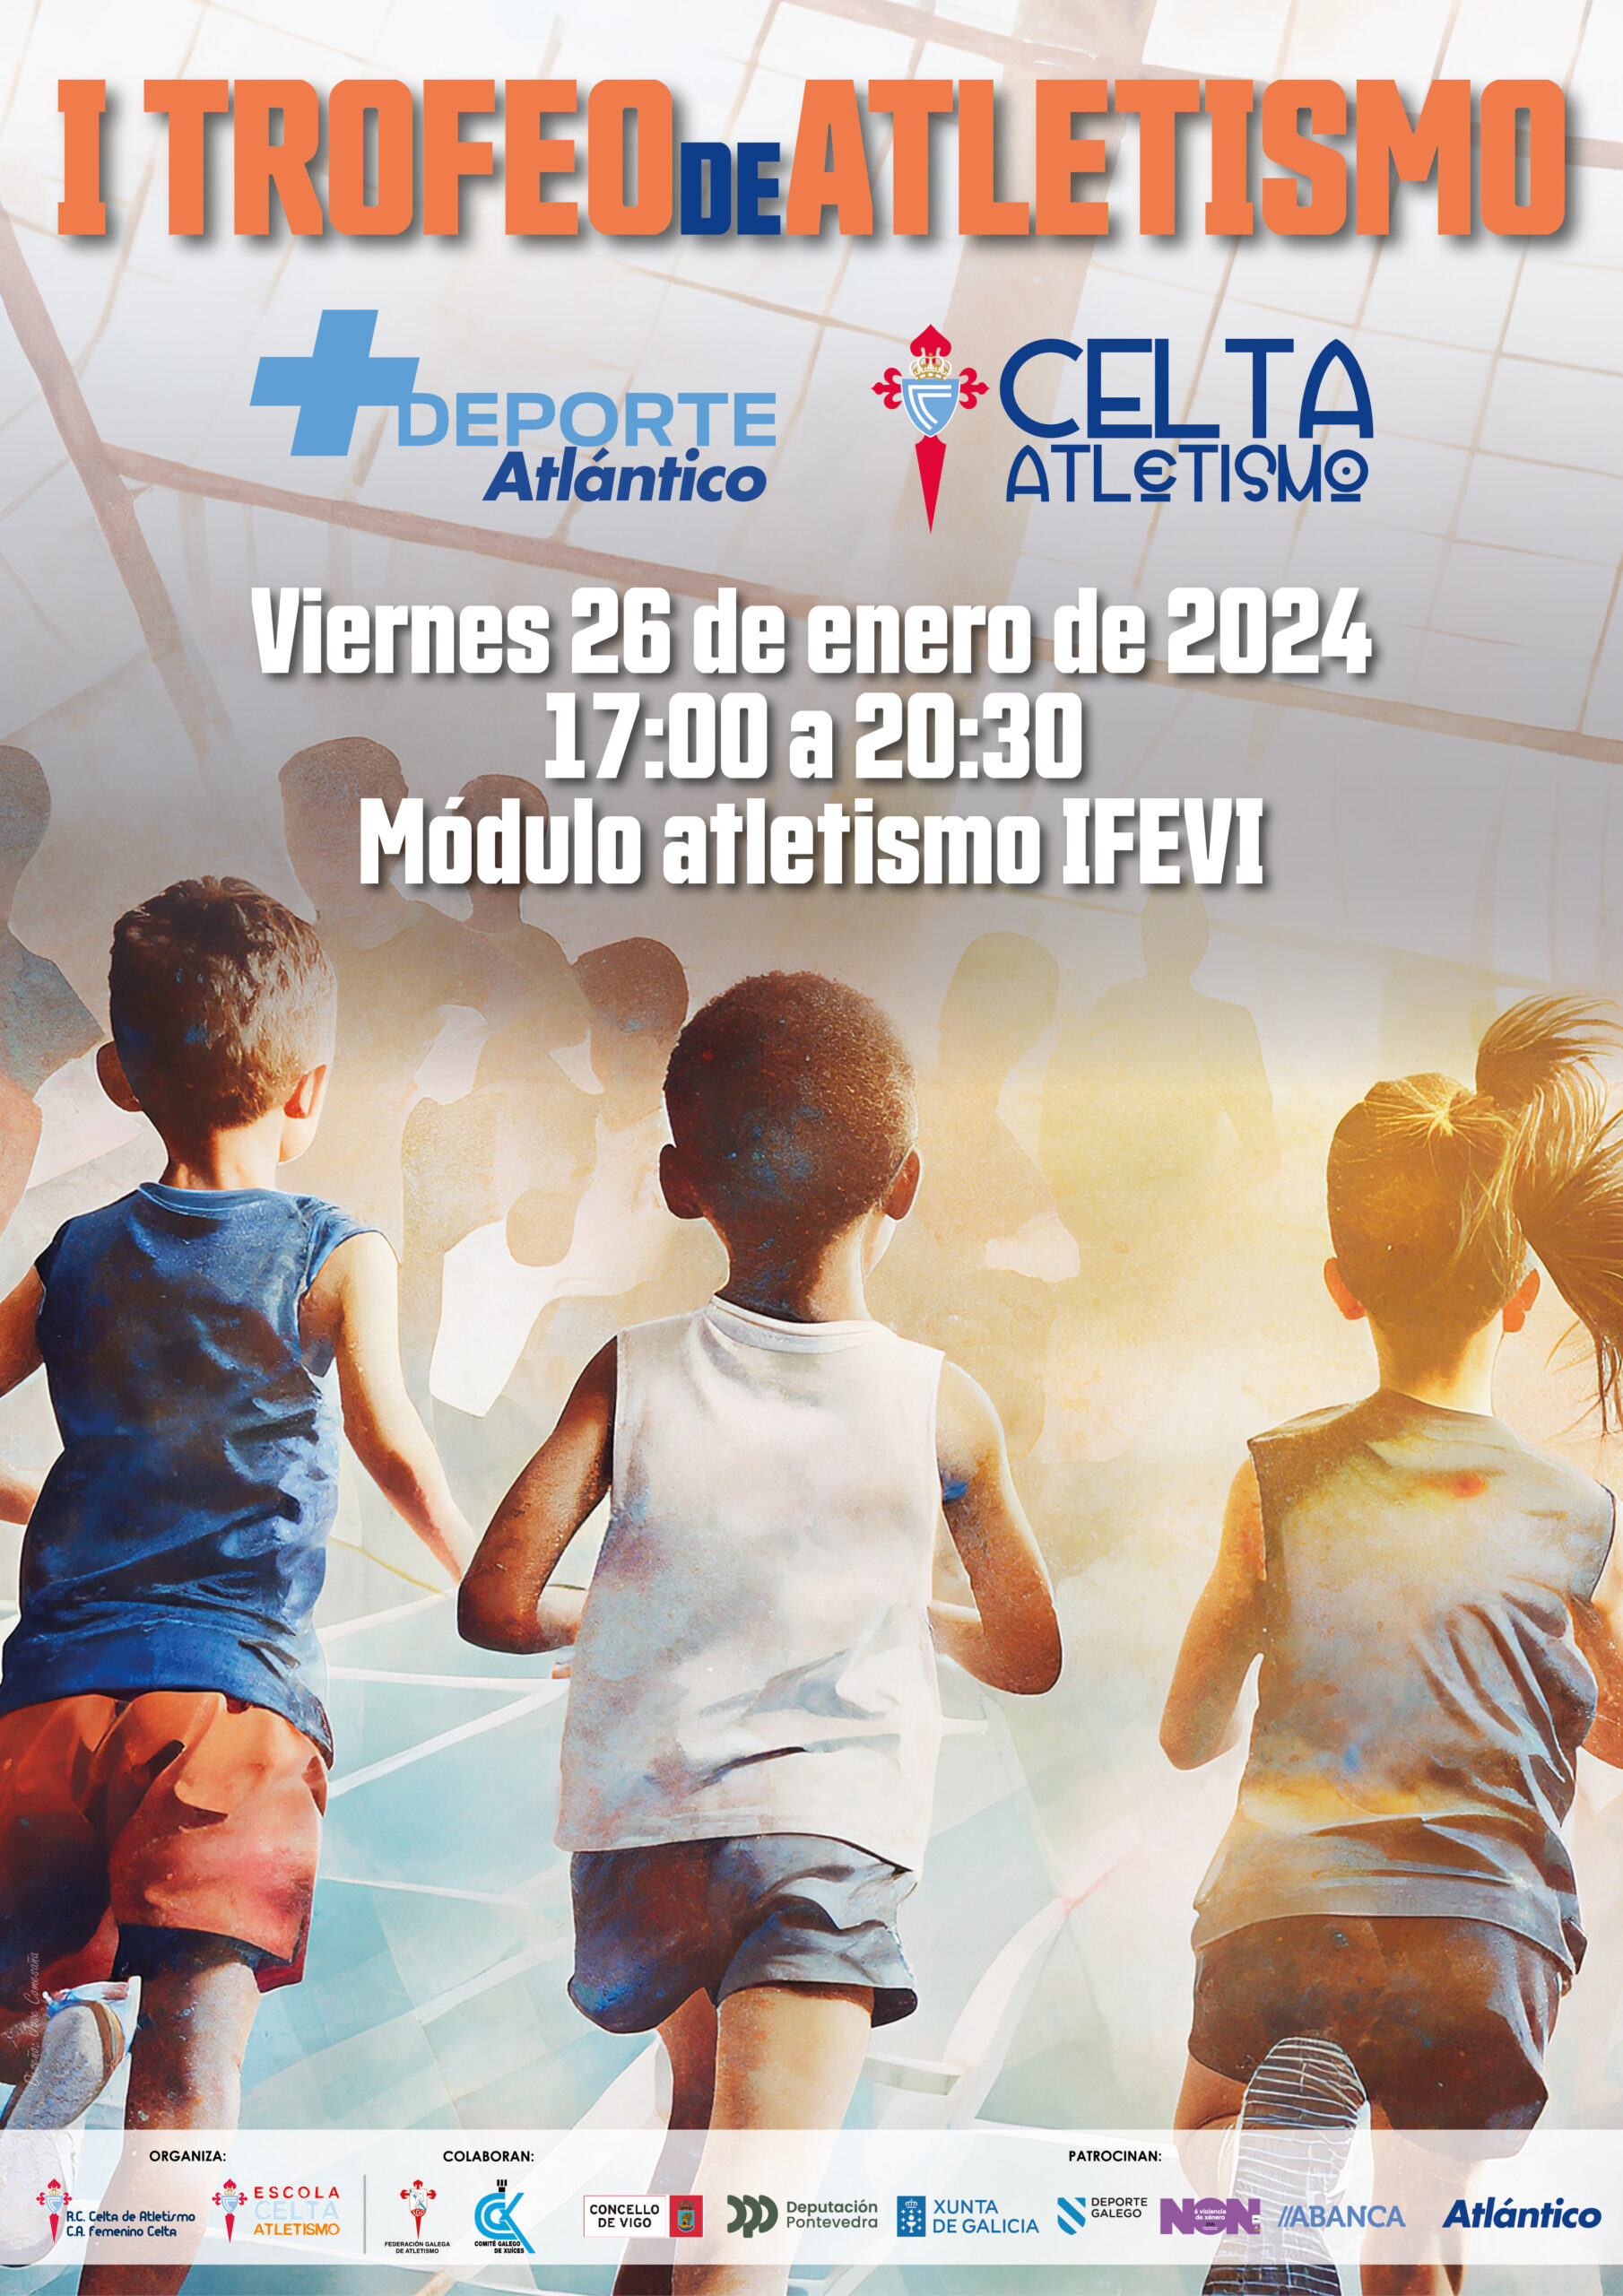 I Trofeo de Atletismo + Deporte Atlántico – Celta Atletismo